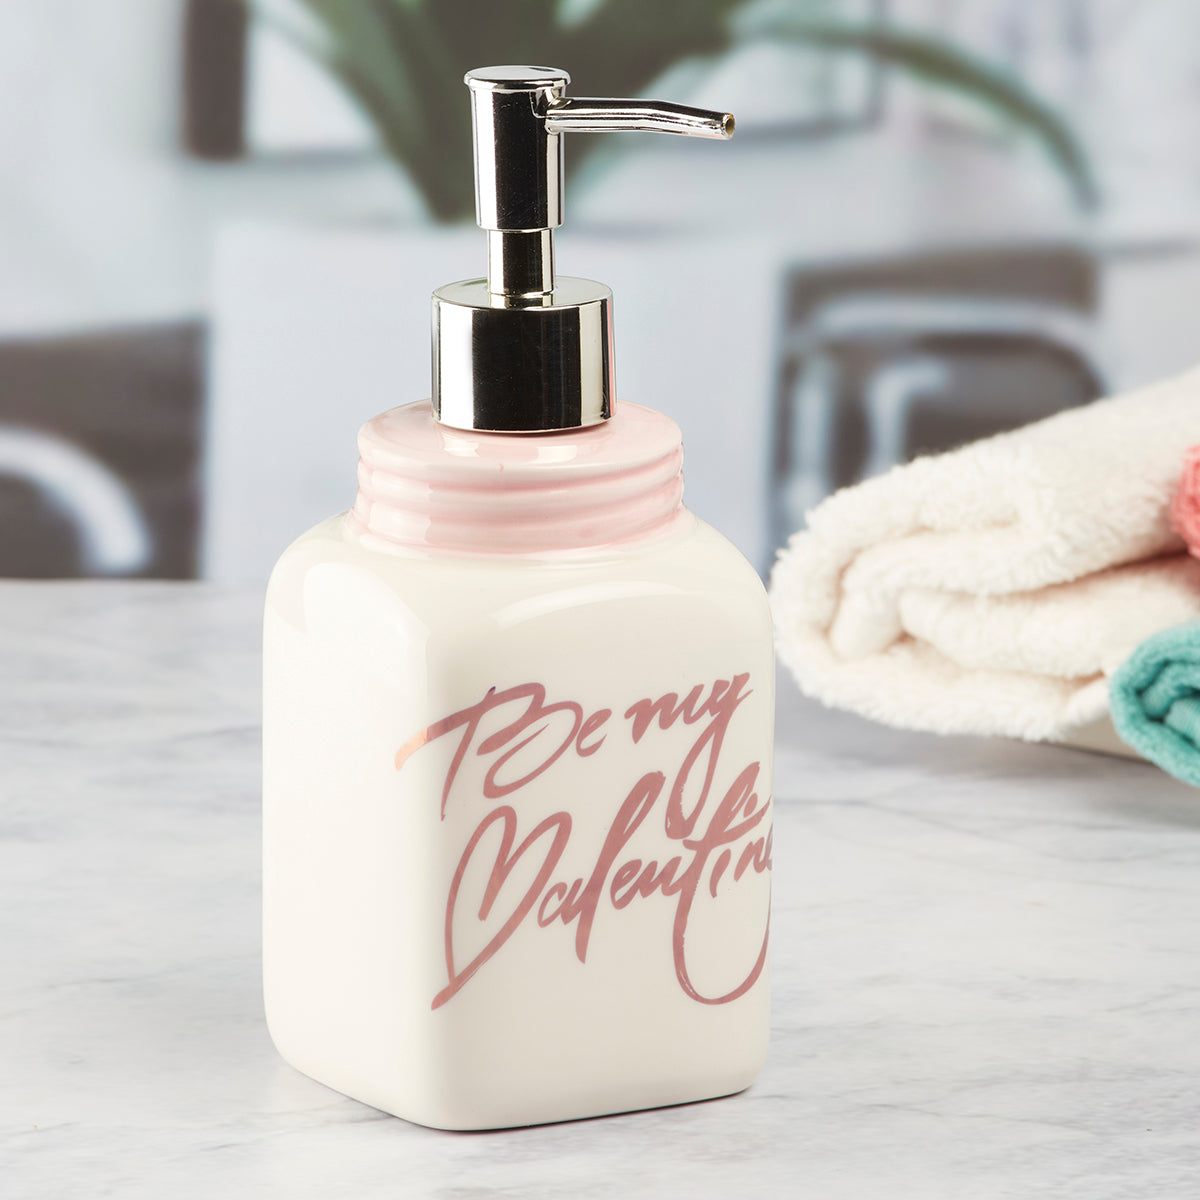 Ceramic Soap Dispenser handwash Pump for Bathroom, Set of 1, White/Pink (9651)